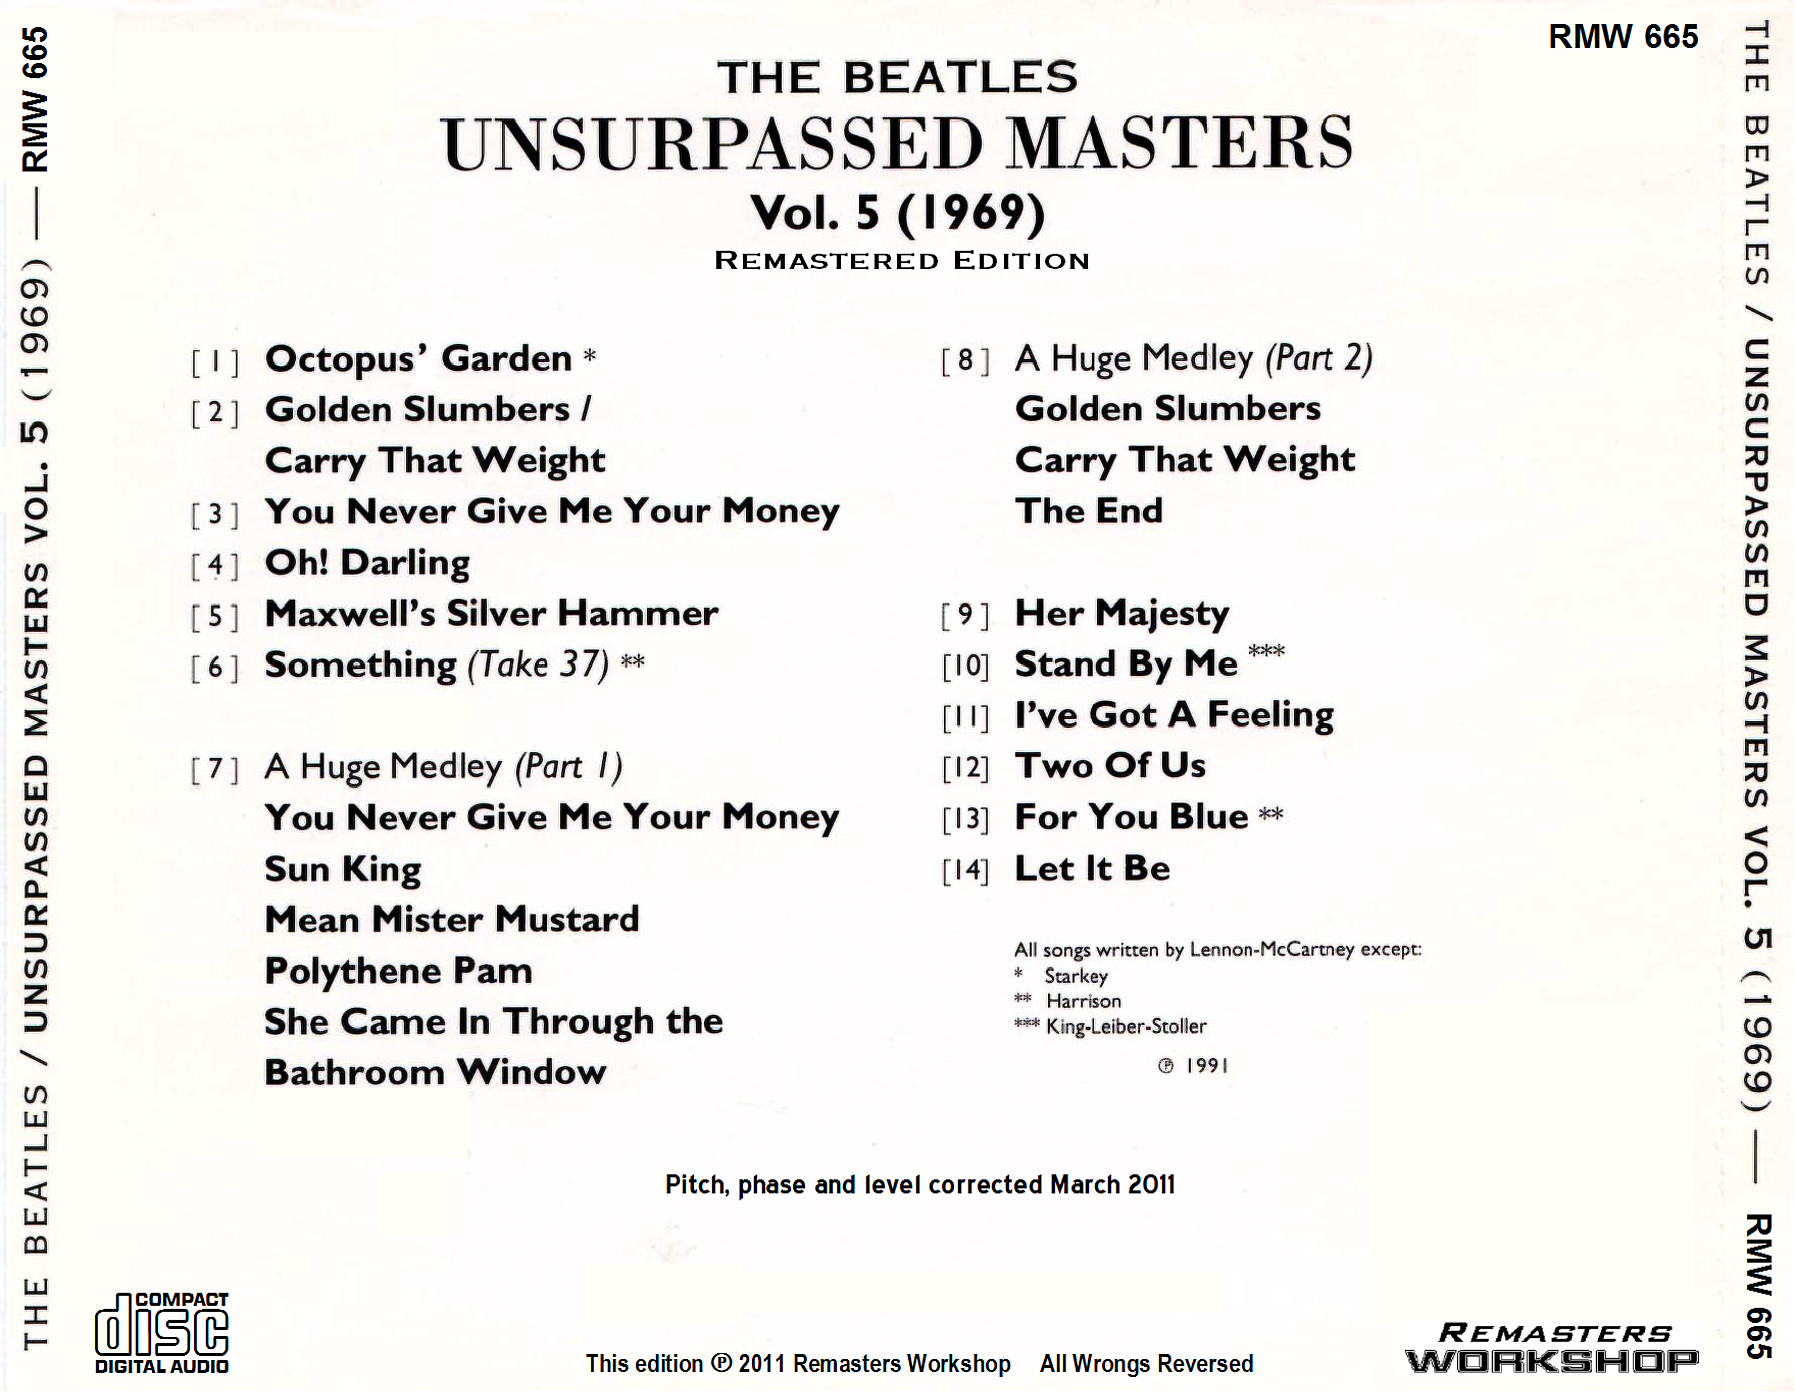 Beatles196xUnsurpassedMastersVol5 (1).png